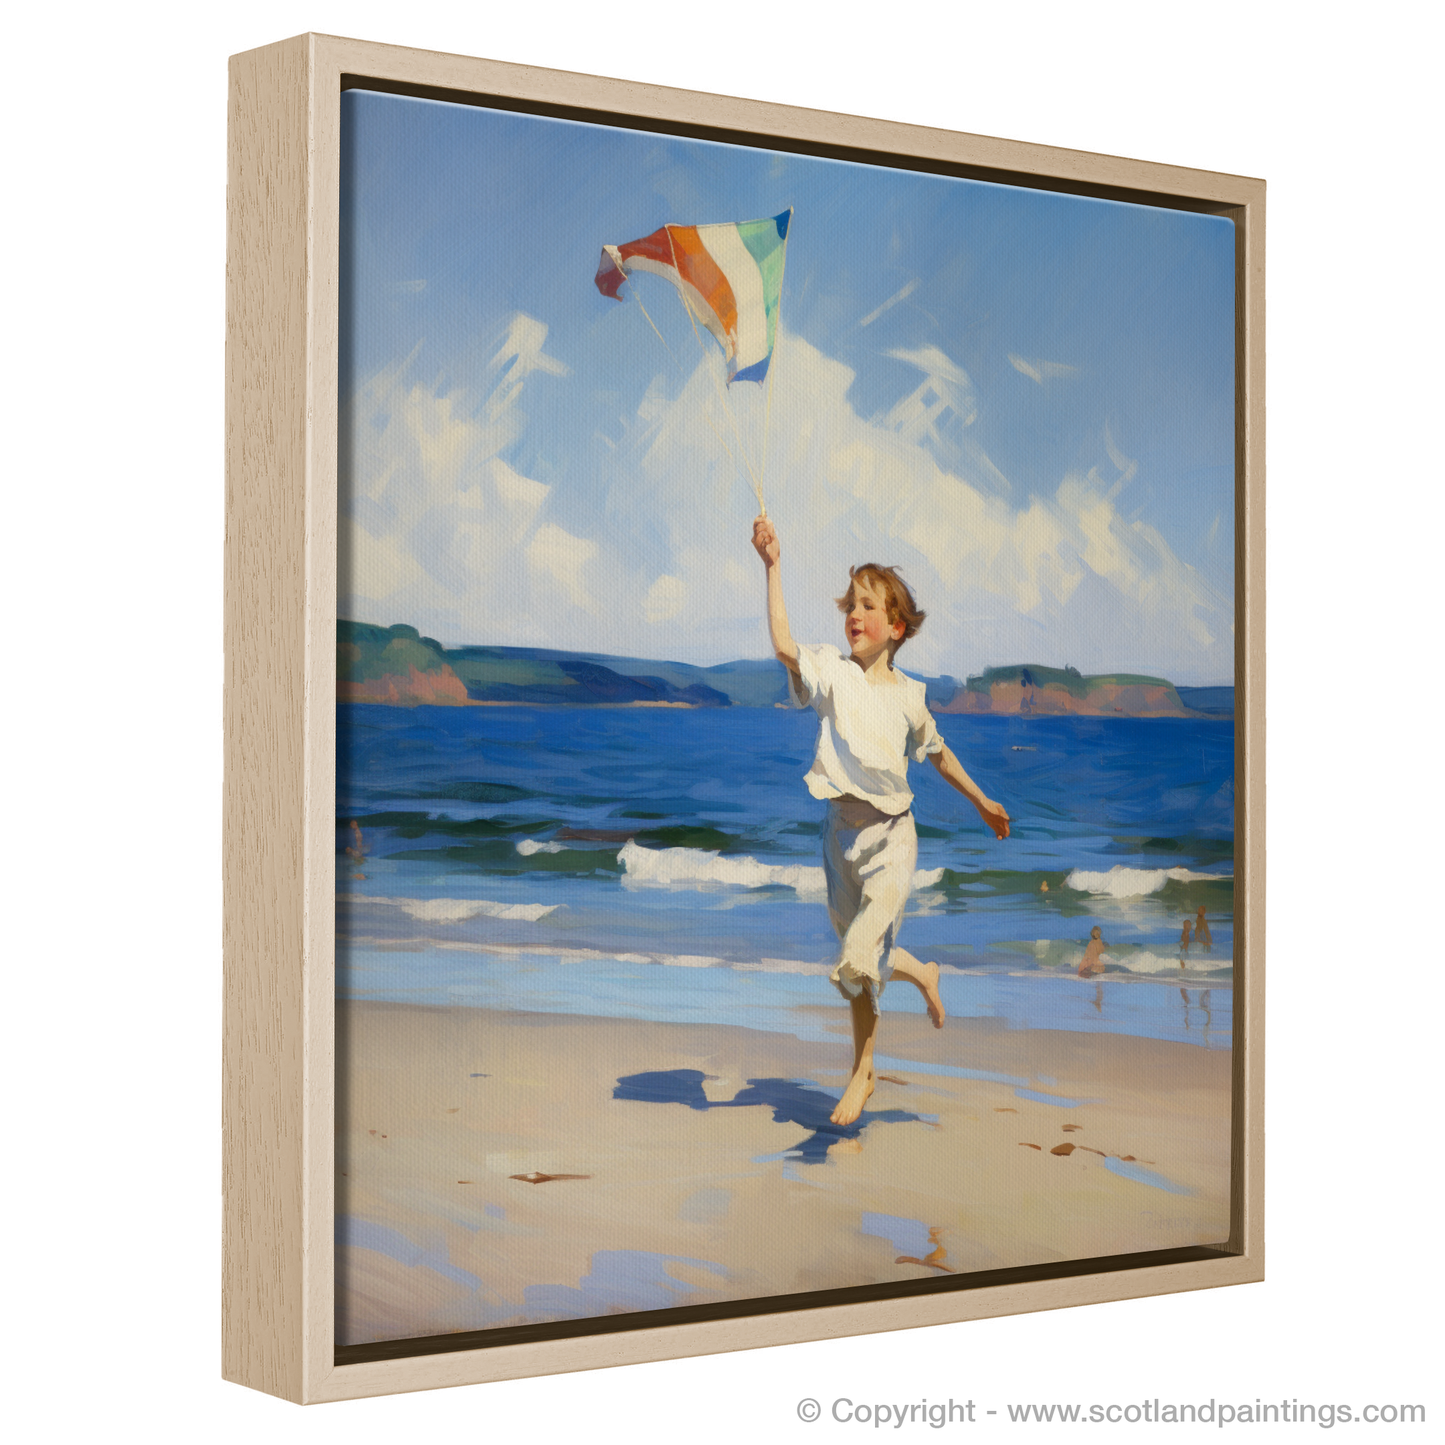 Painting and Art Print of A boy flying a kite at Culzean Beach entitled "Soaring Spirits at Culzean Beach".